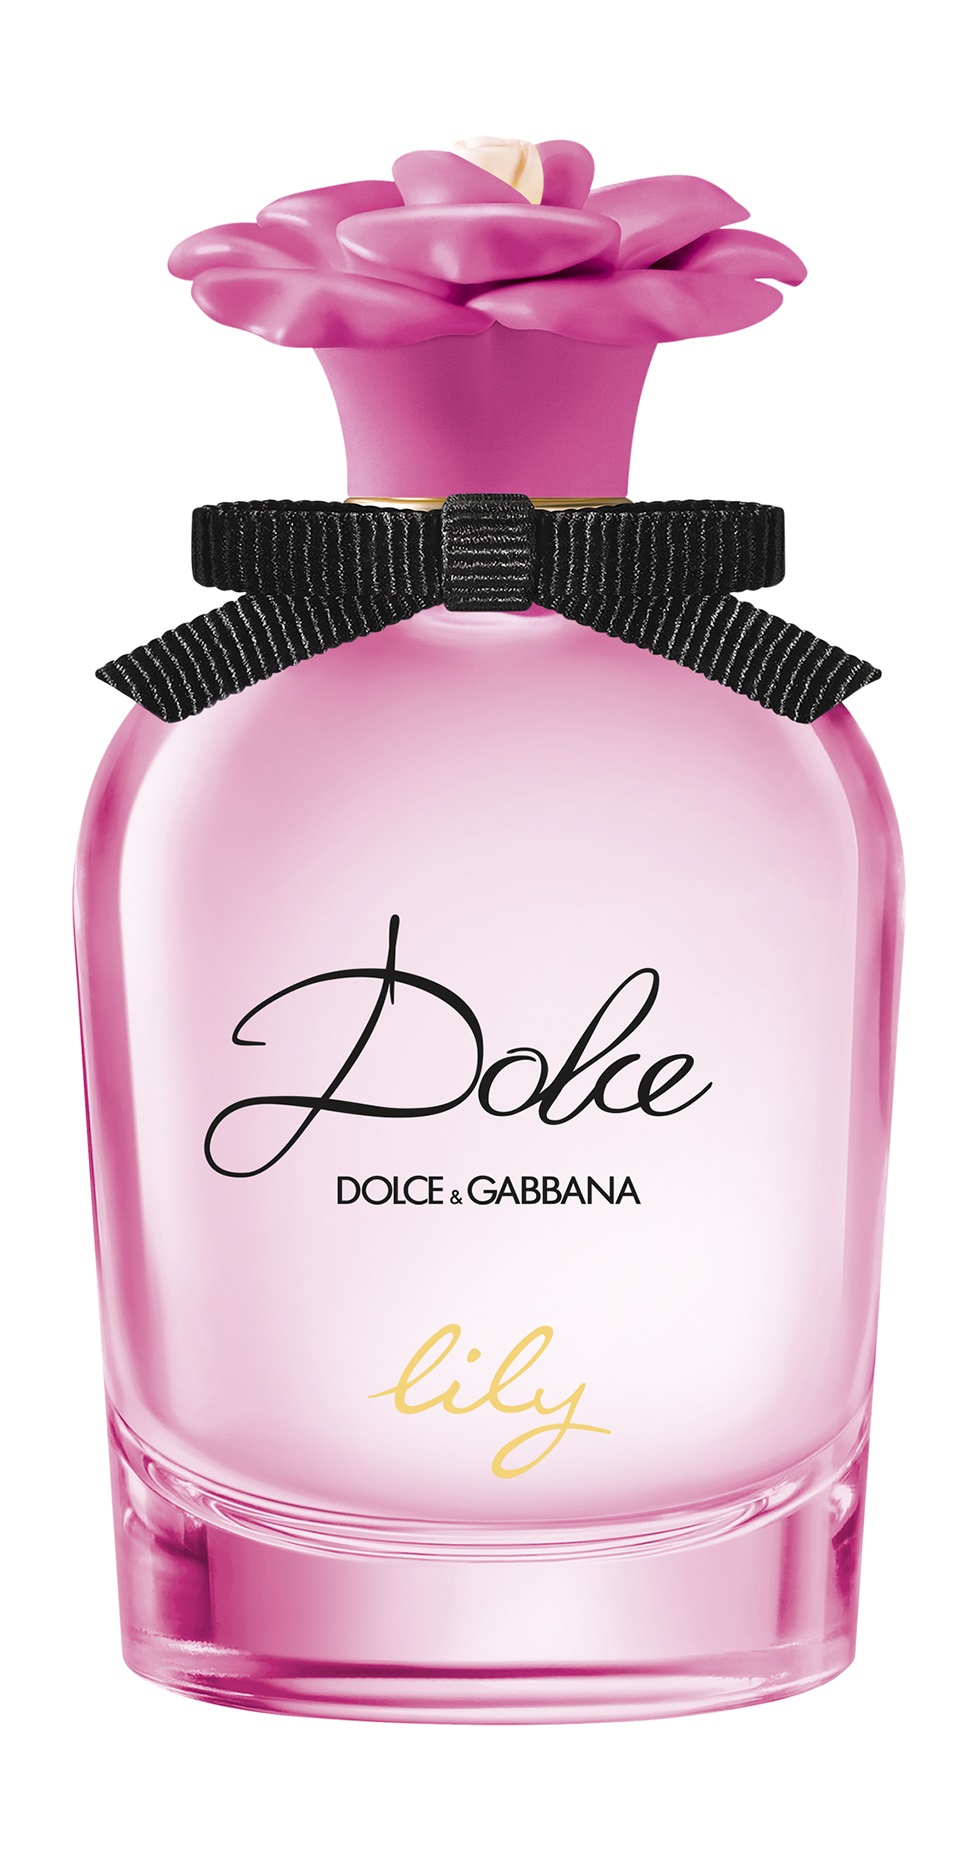 Dolce Gabbana Dolce Garden 50 мл. Парфюмерная вода Dolce & Gabbana Dolce Peony. Духи Дольче Габбана Дольче Шайн. Dolce&Gabbana Dolce Garden 75. Дольче габбана цена фото